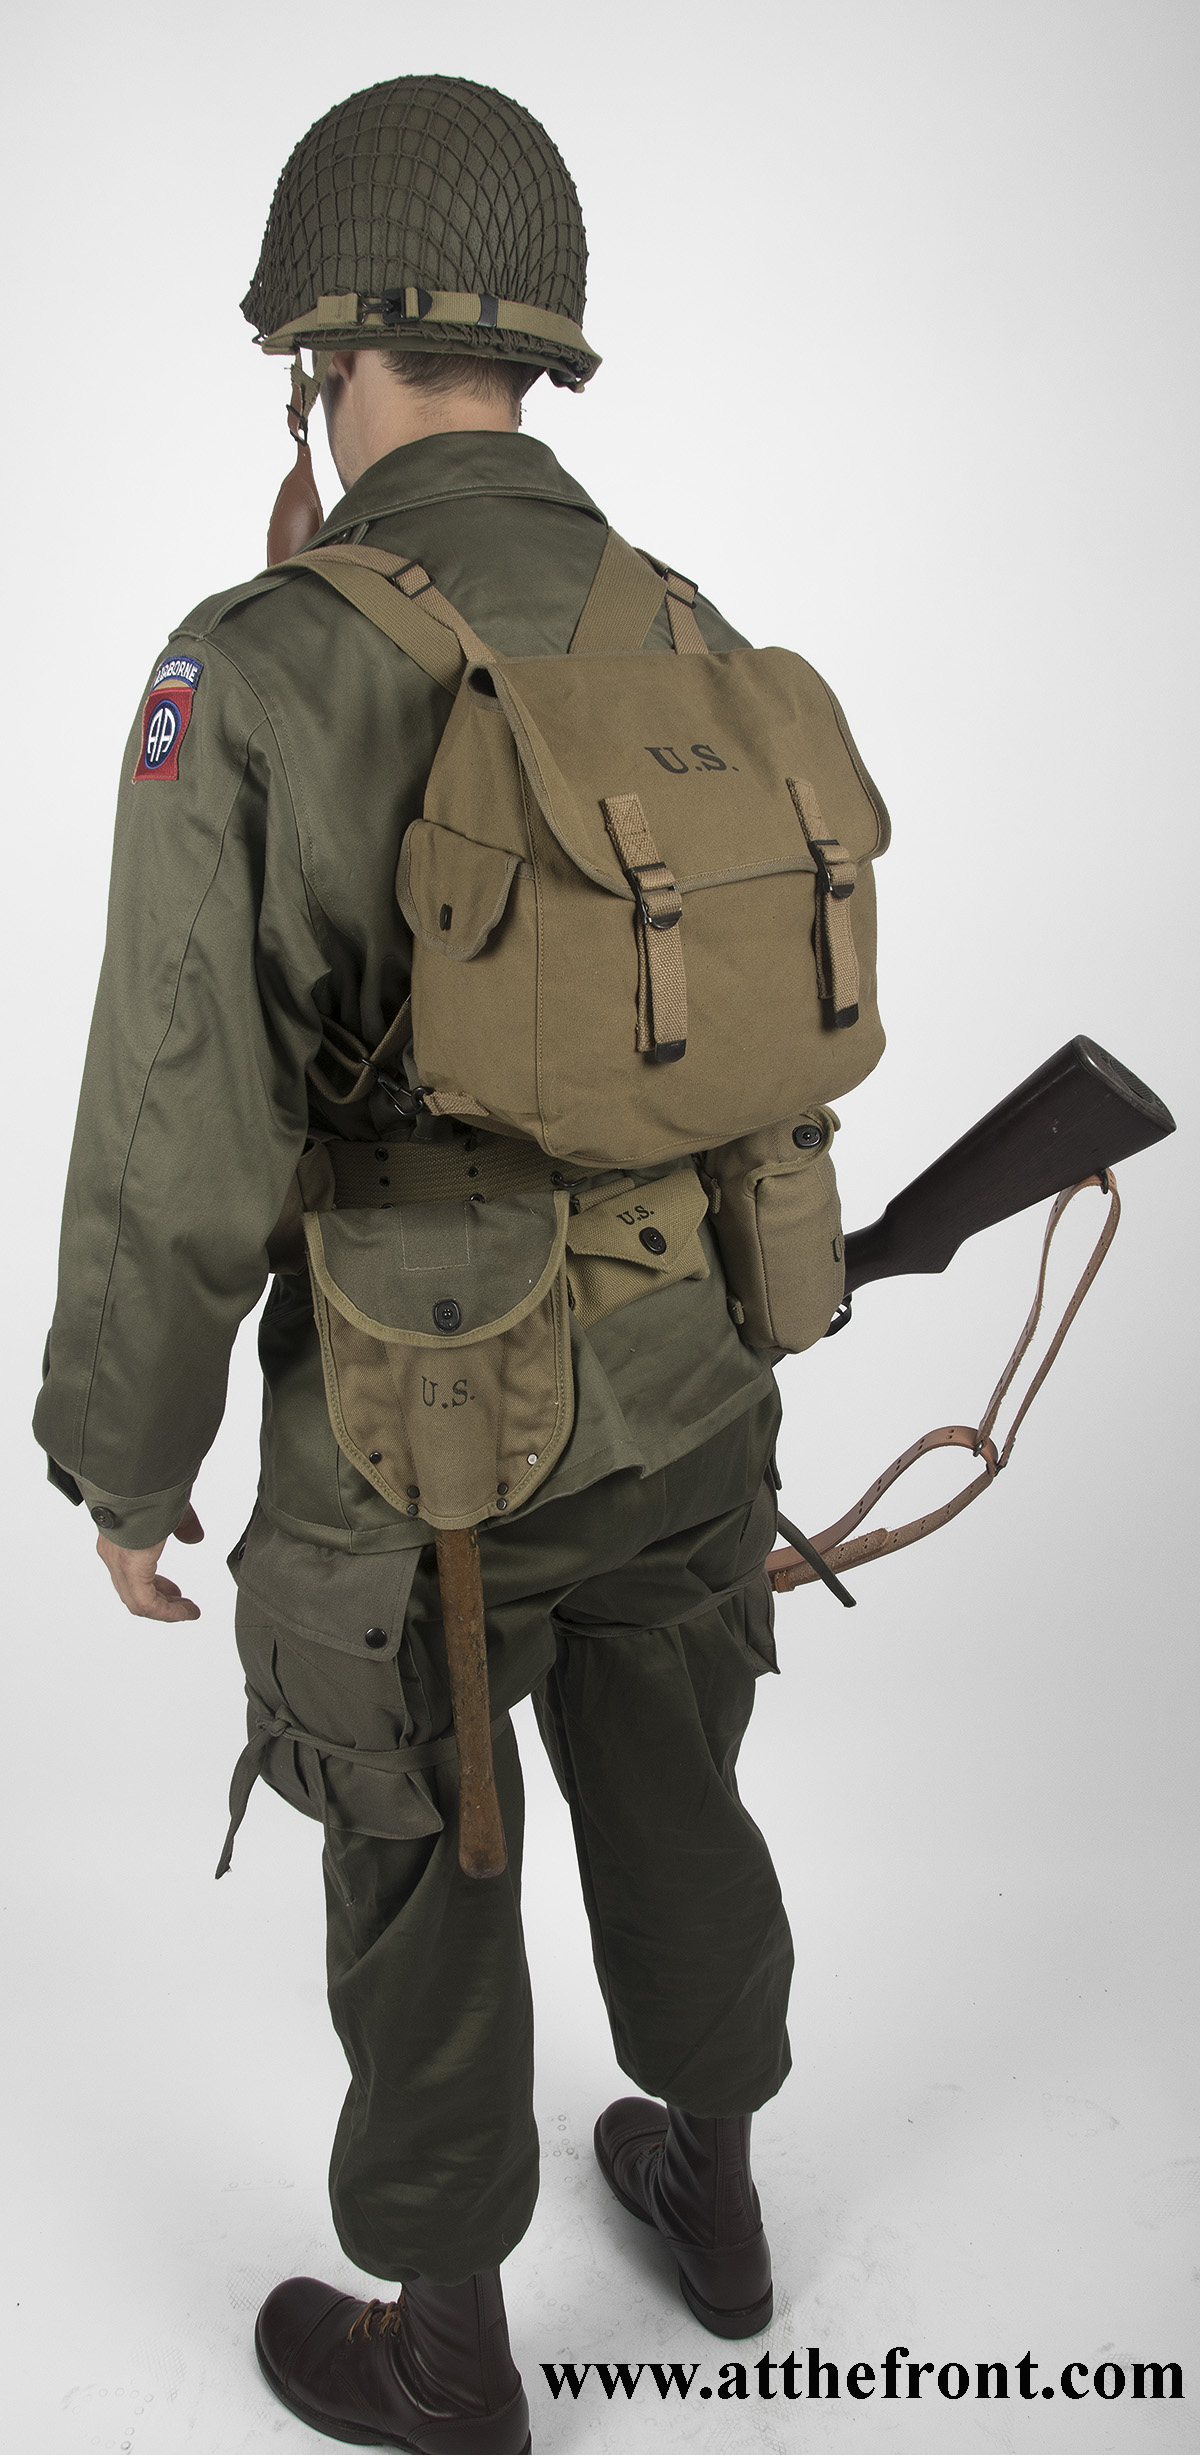 WWII Paratrooper Uniform